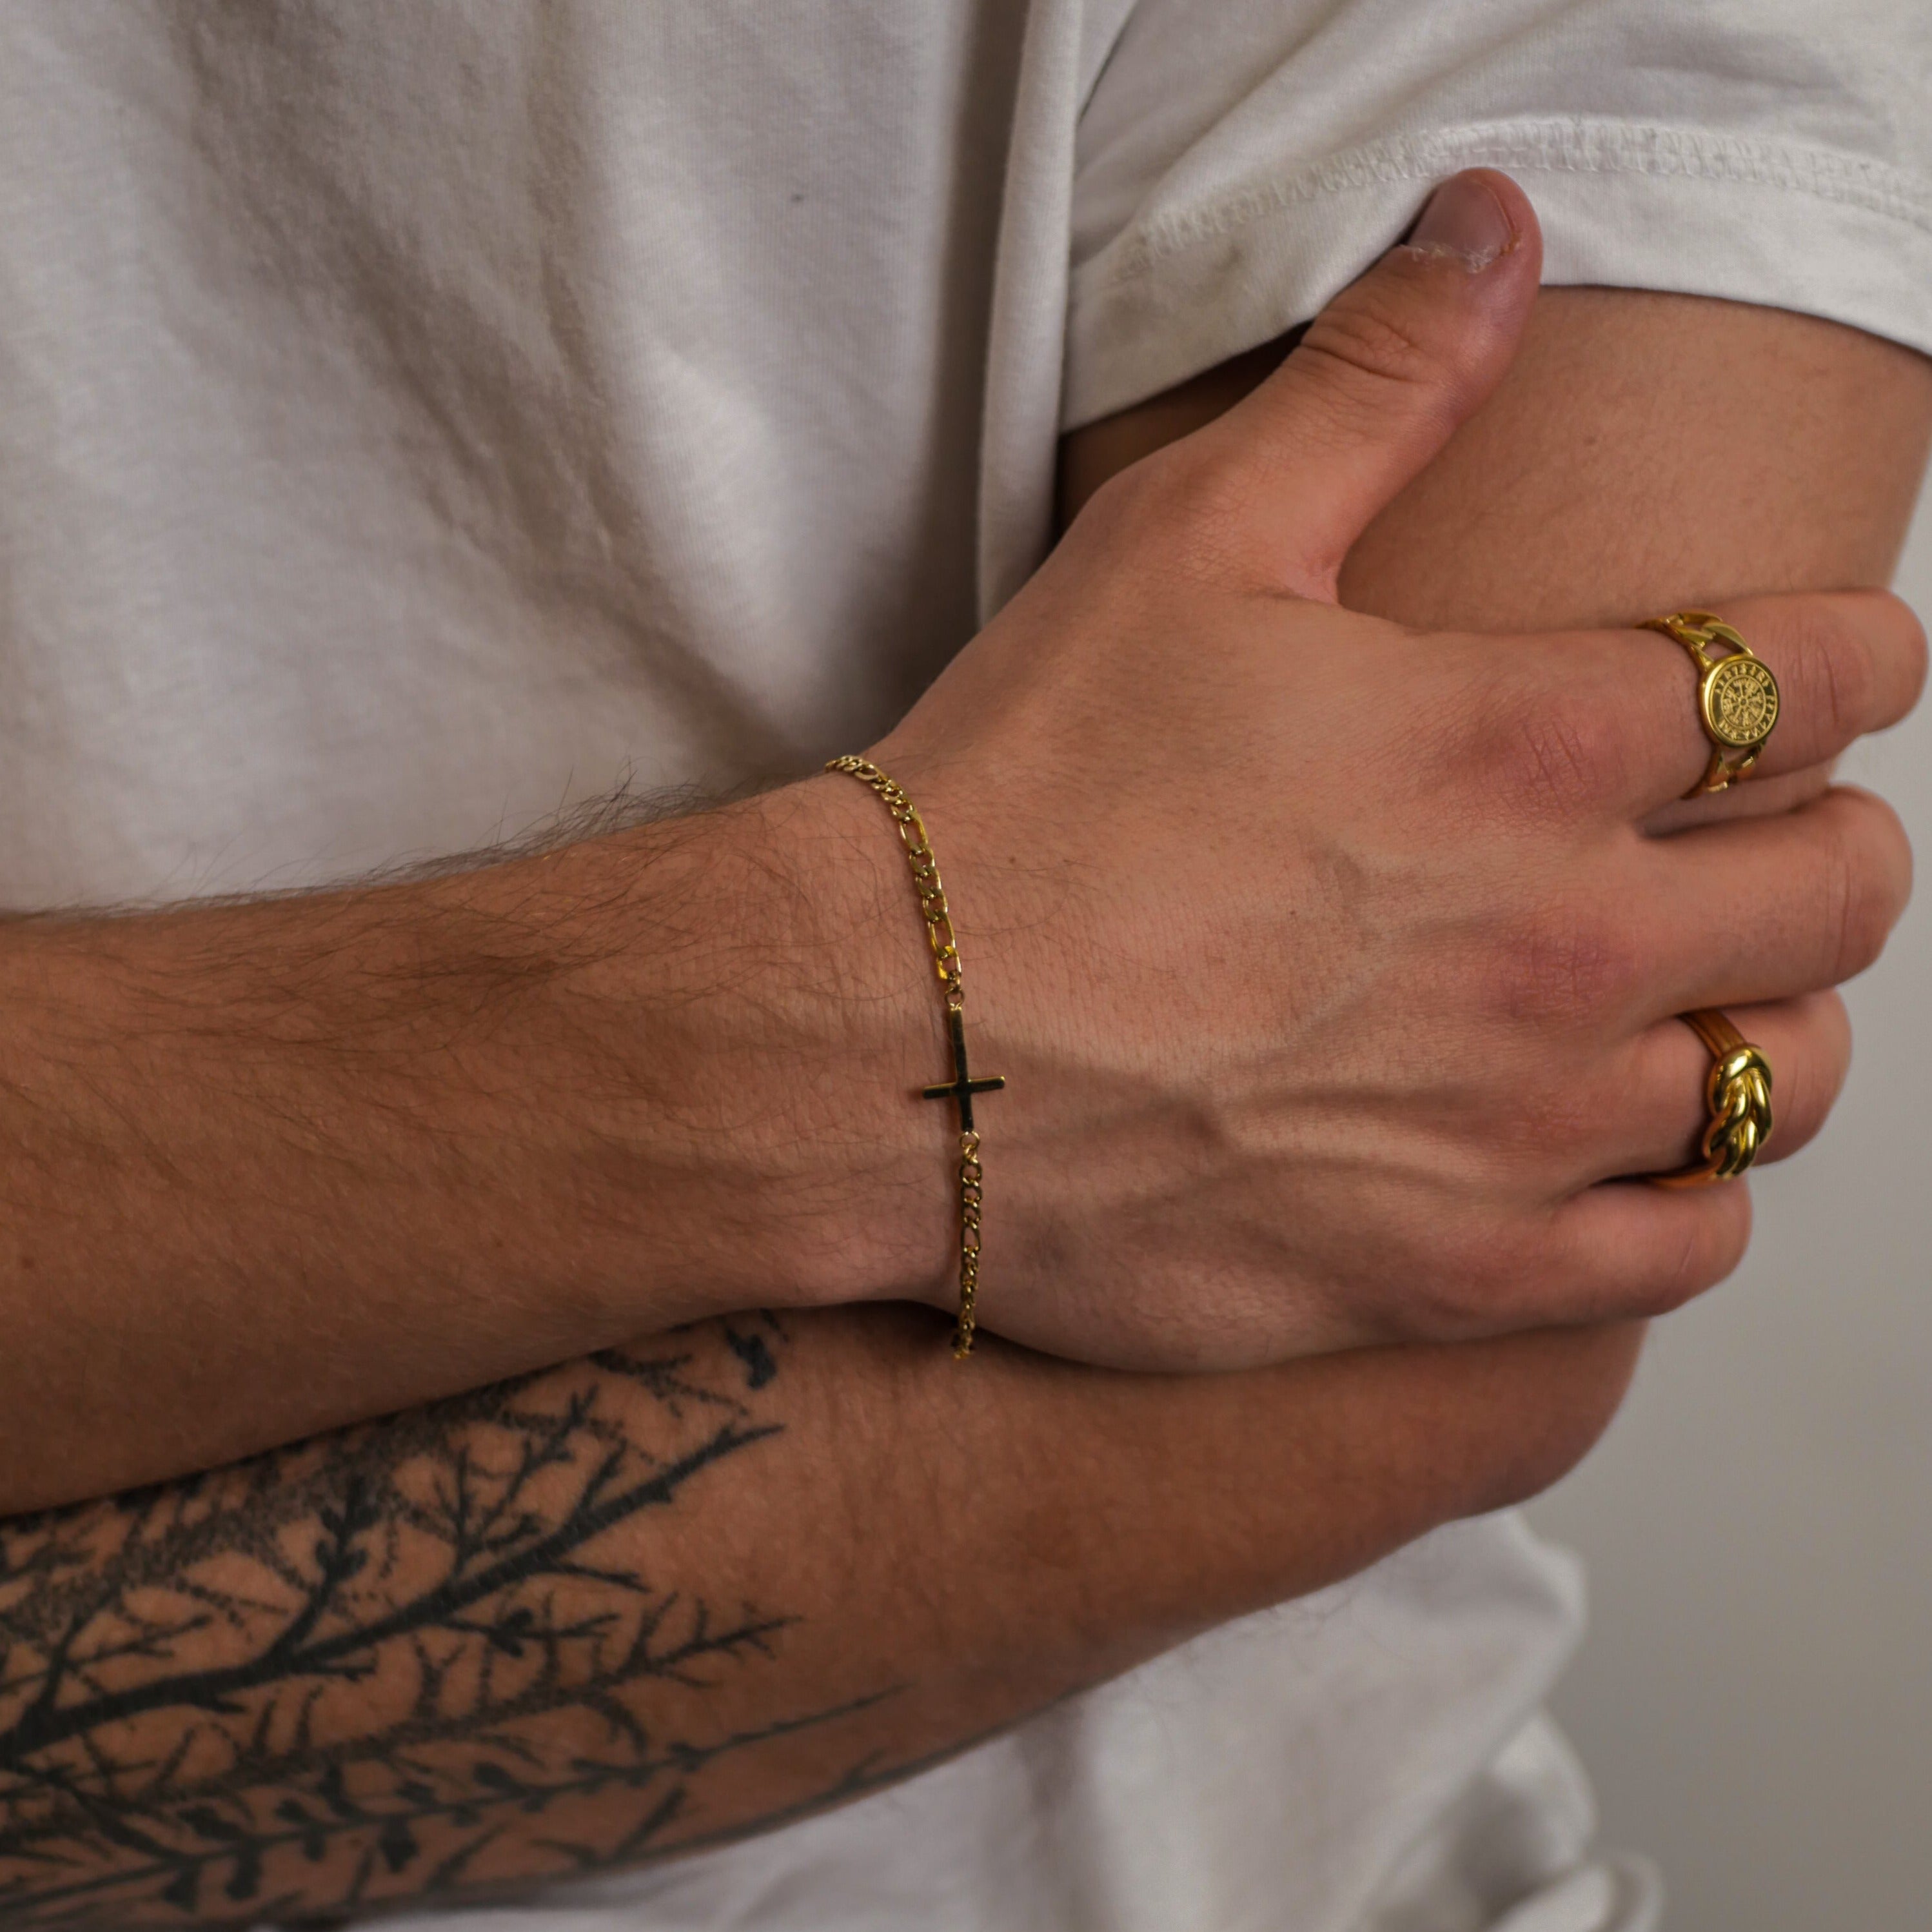 NL Antique Cross bracelet - Gold-toned